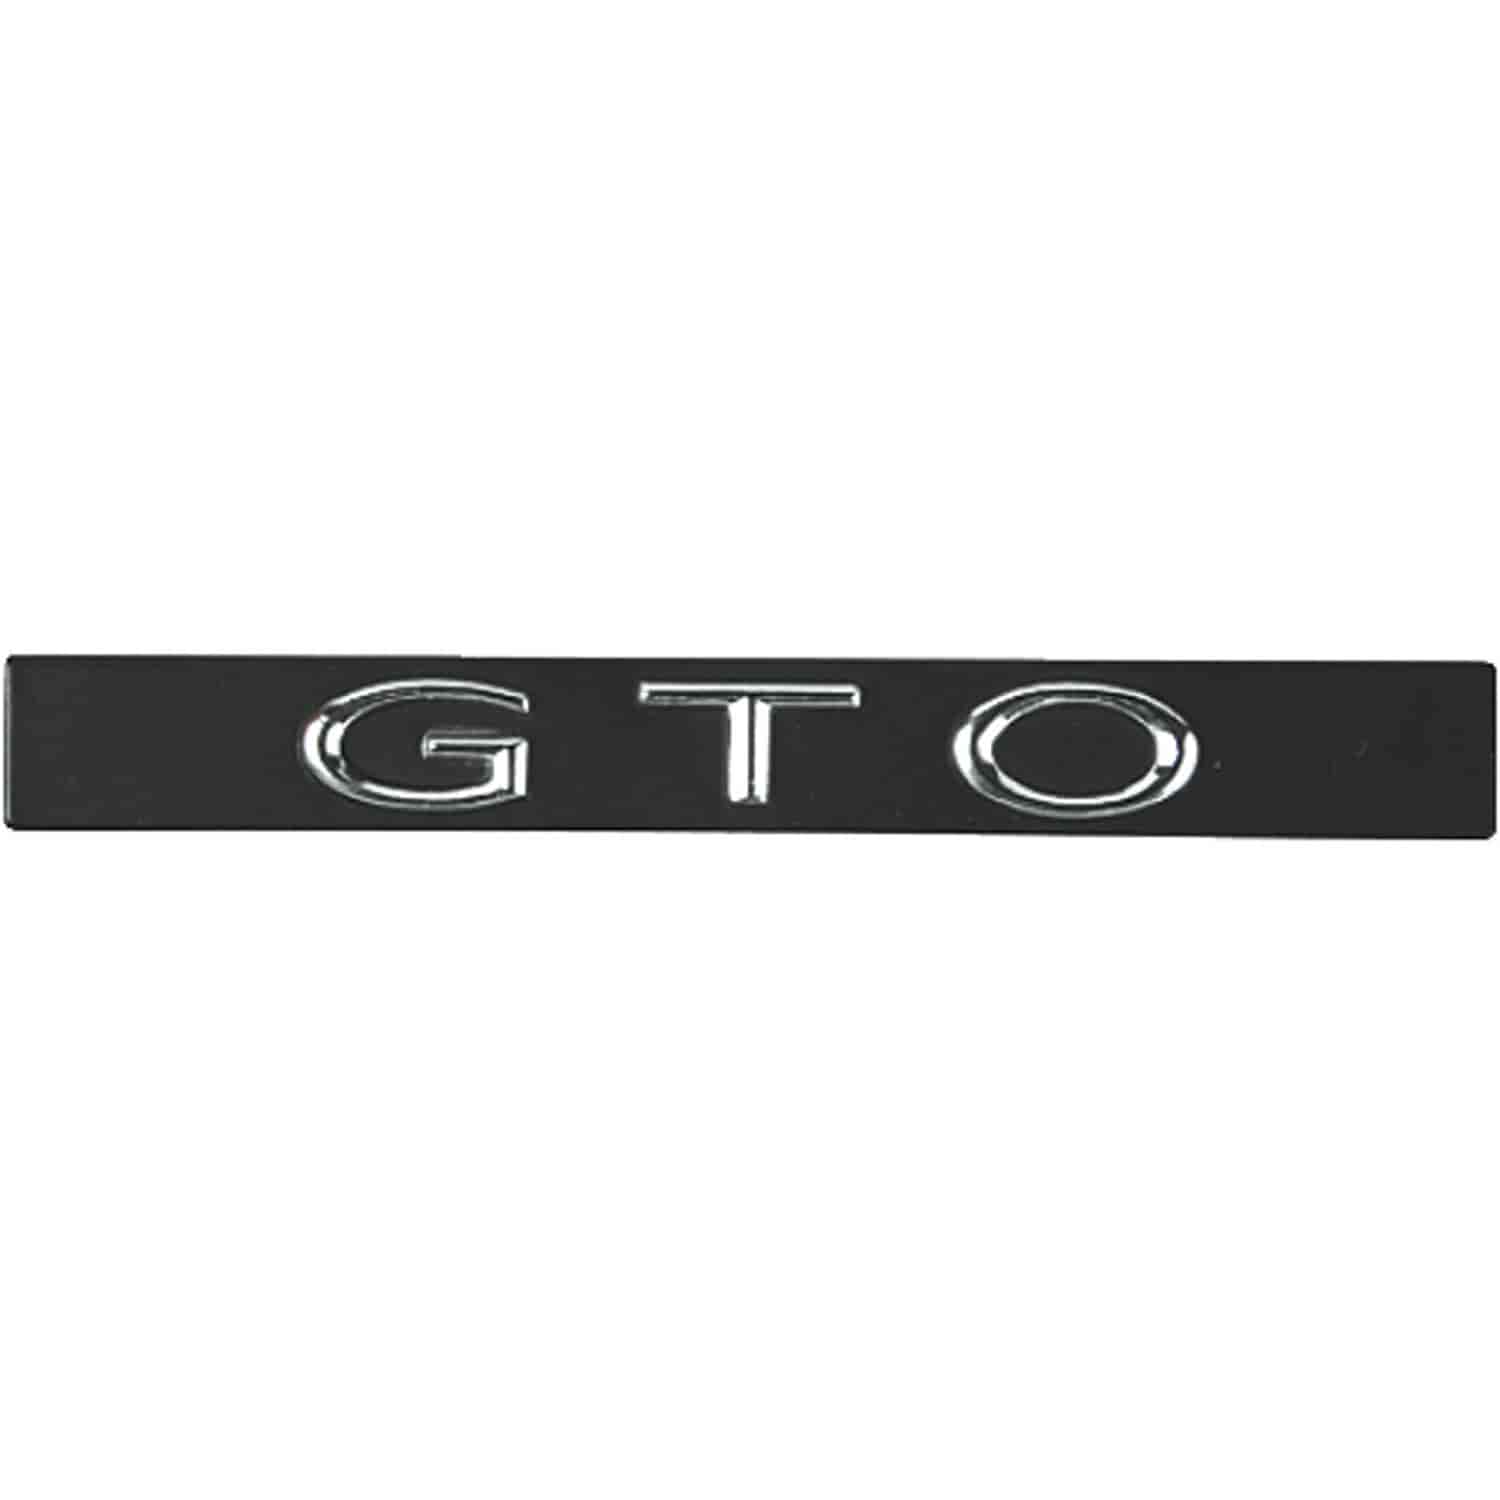 Emblem Door Panel 1973 GTO